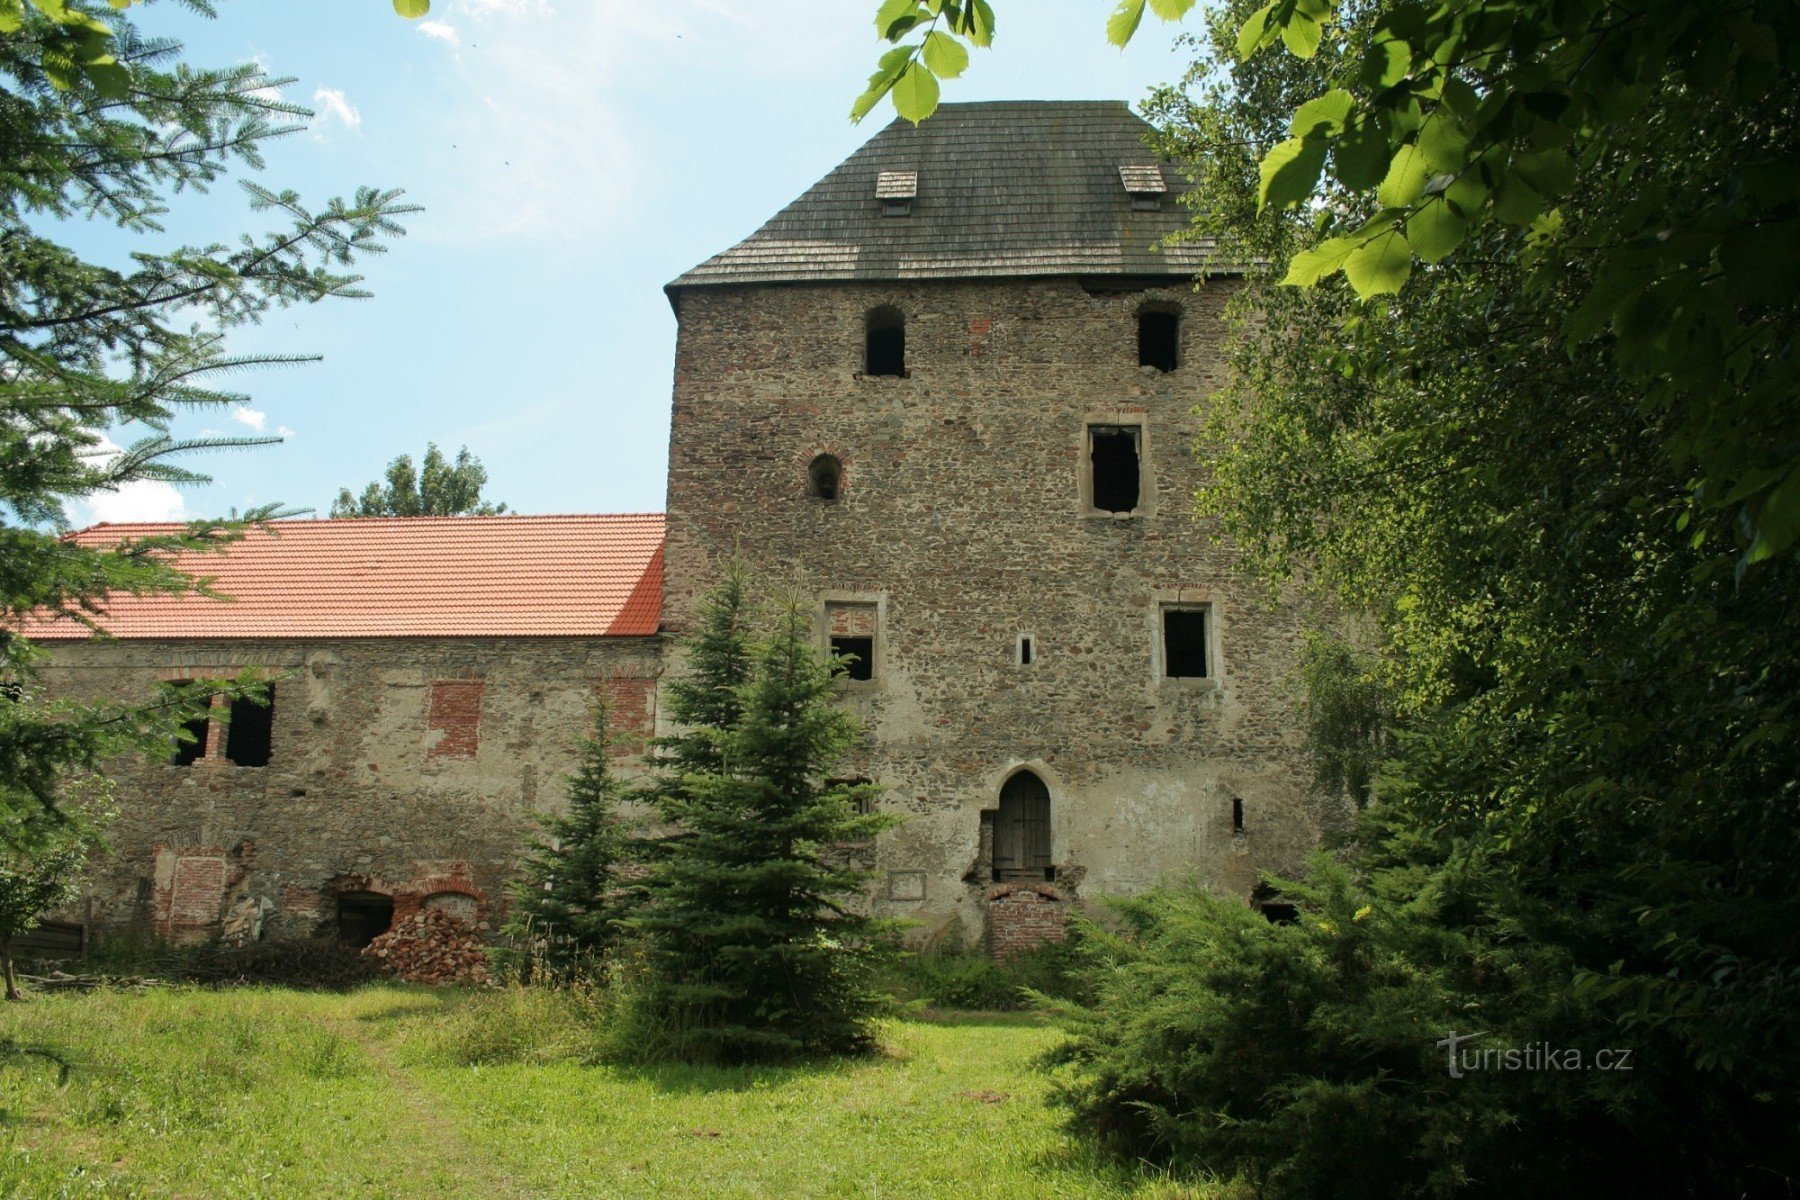 Cachrov fortress